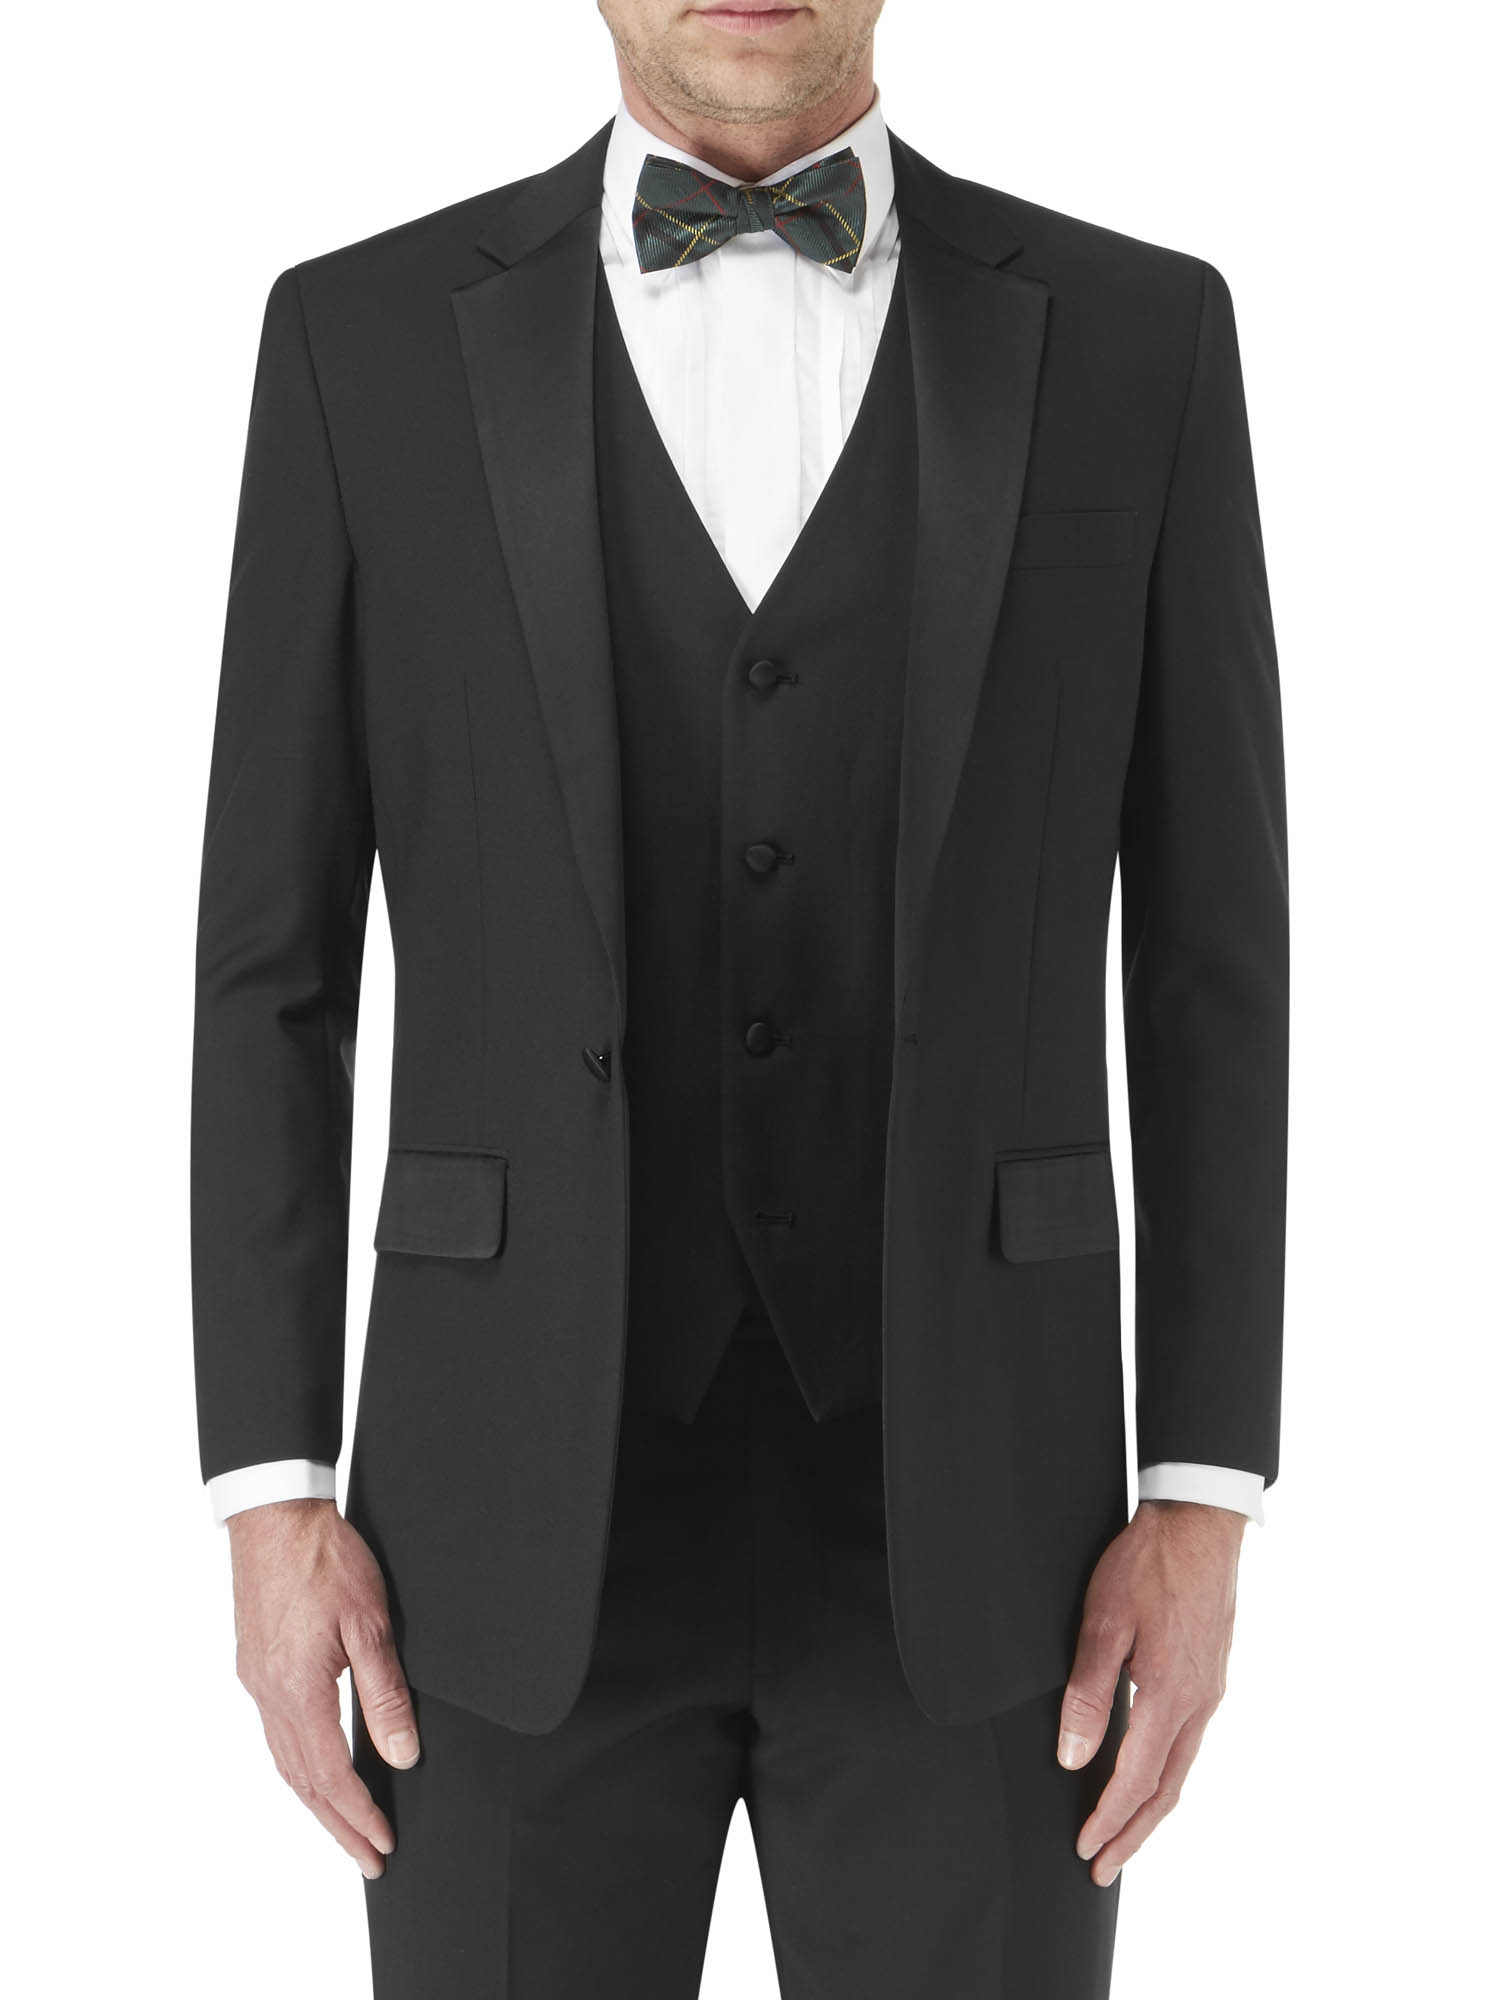 Latimer Dinner Suit Black 3 piece - Tom Murphy's Formal and Menswear